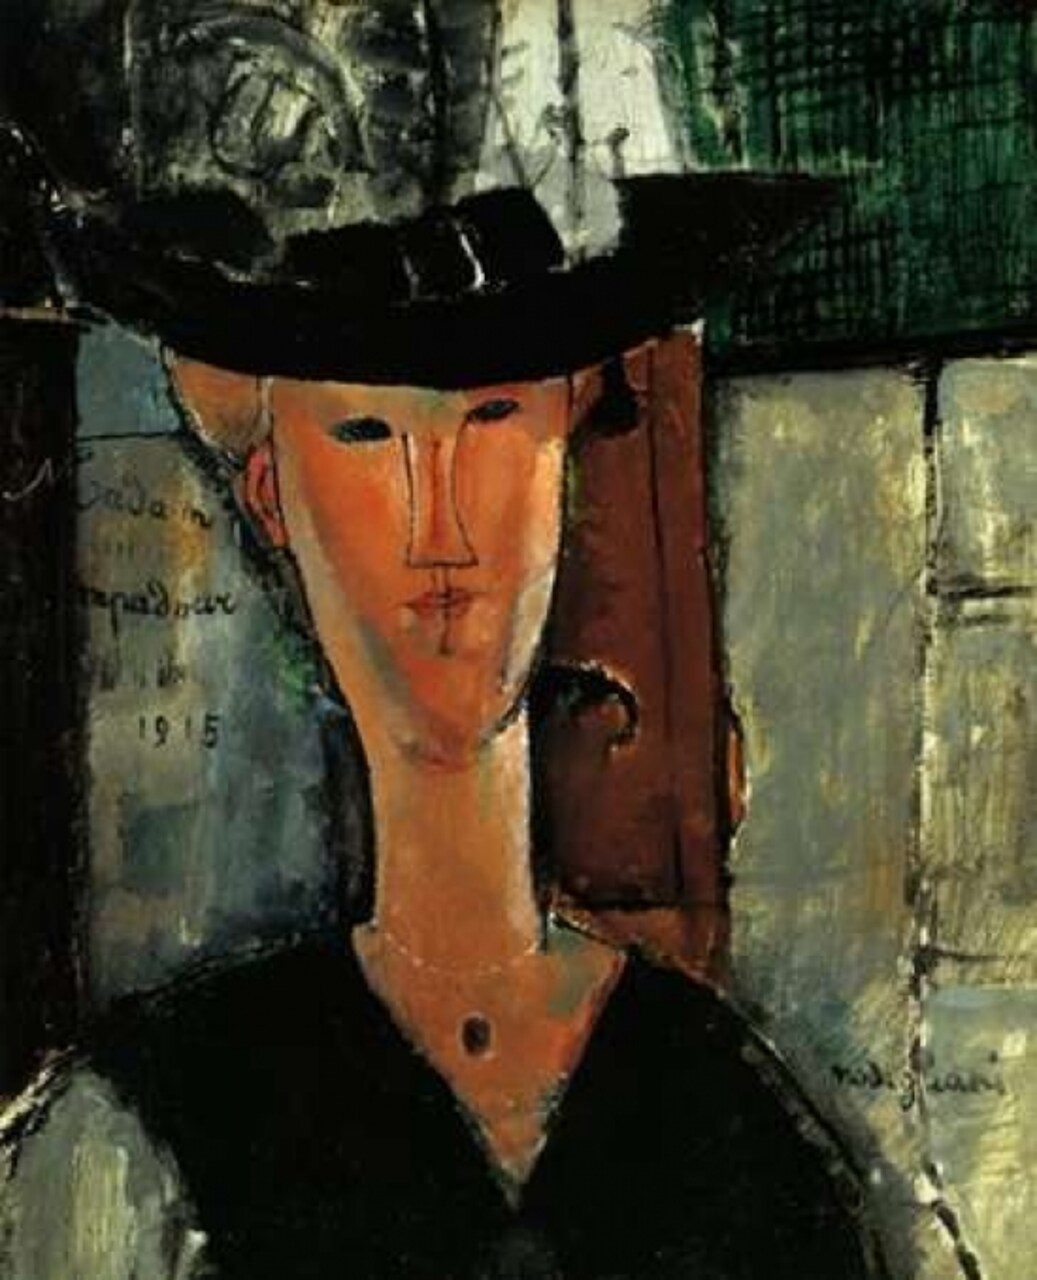 Madam Pompadour Poster Print by  Amedeo Modigliani - Item # VARPDX373685